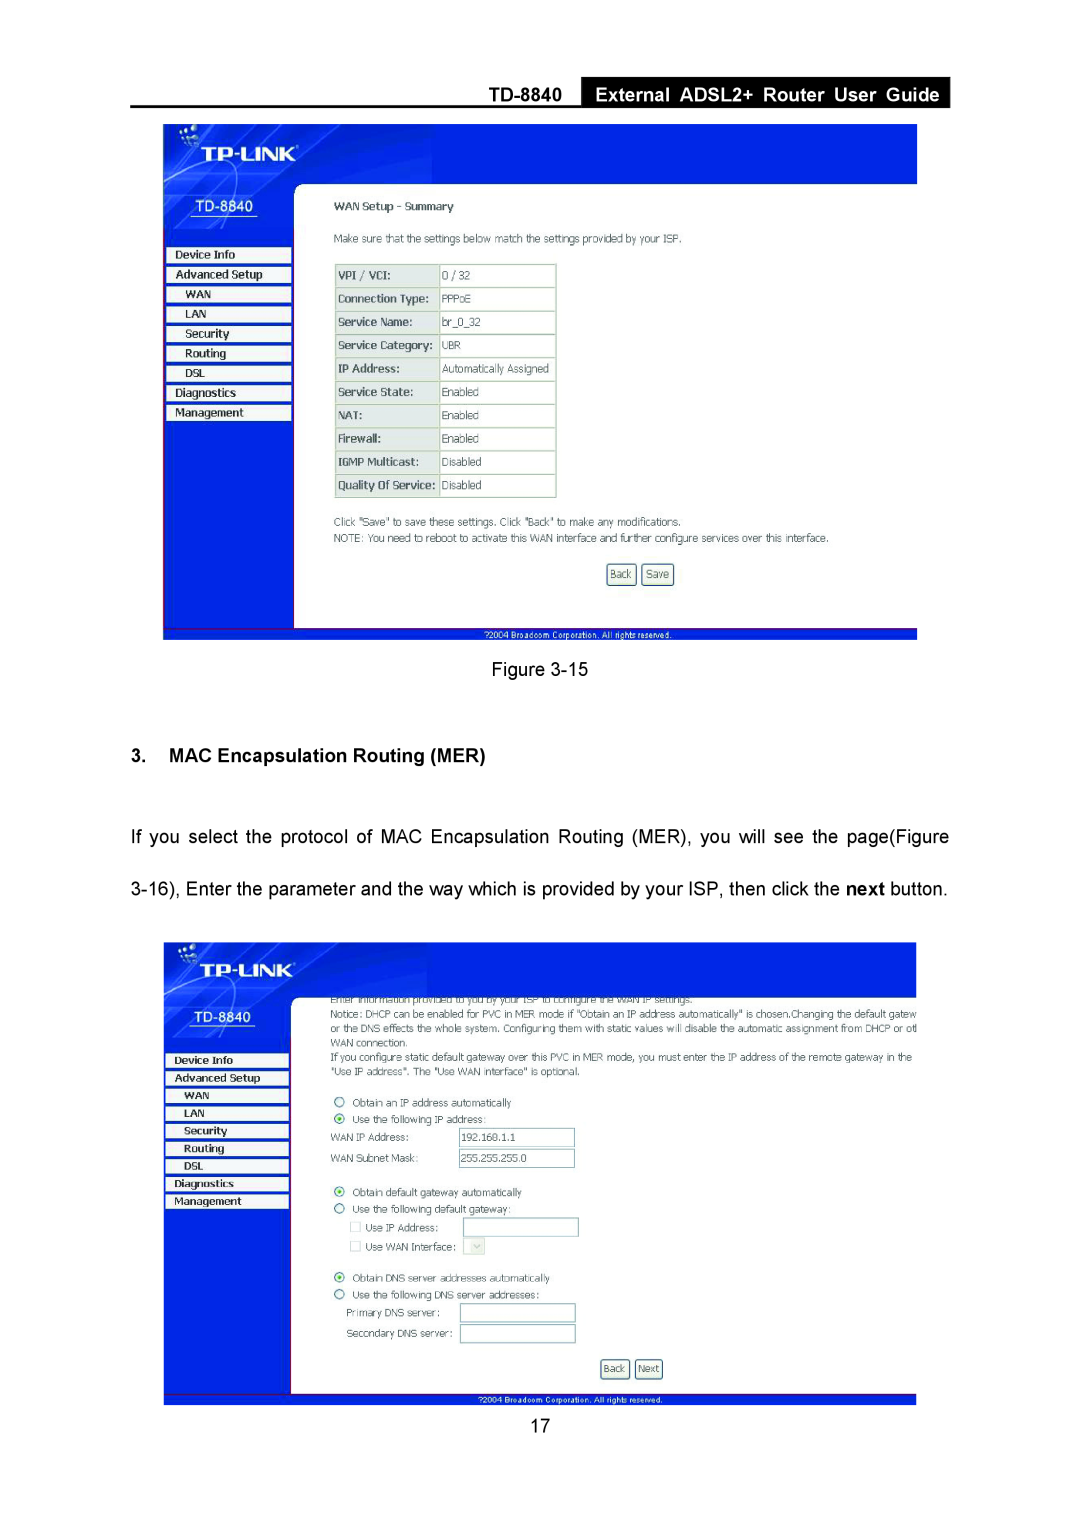 TP-Link TD-8840 manual External ADSL2+ Router User Guide, MAC Encapsulation Routing MER 